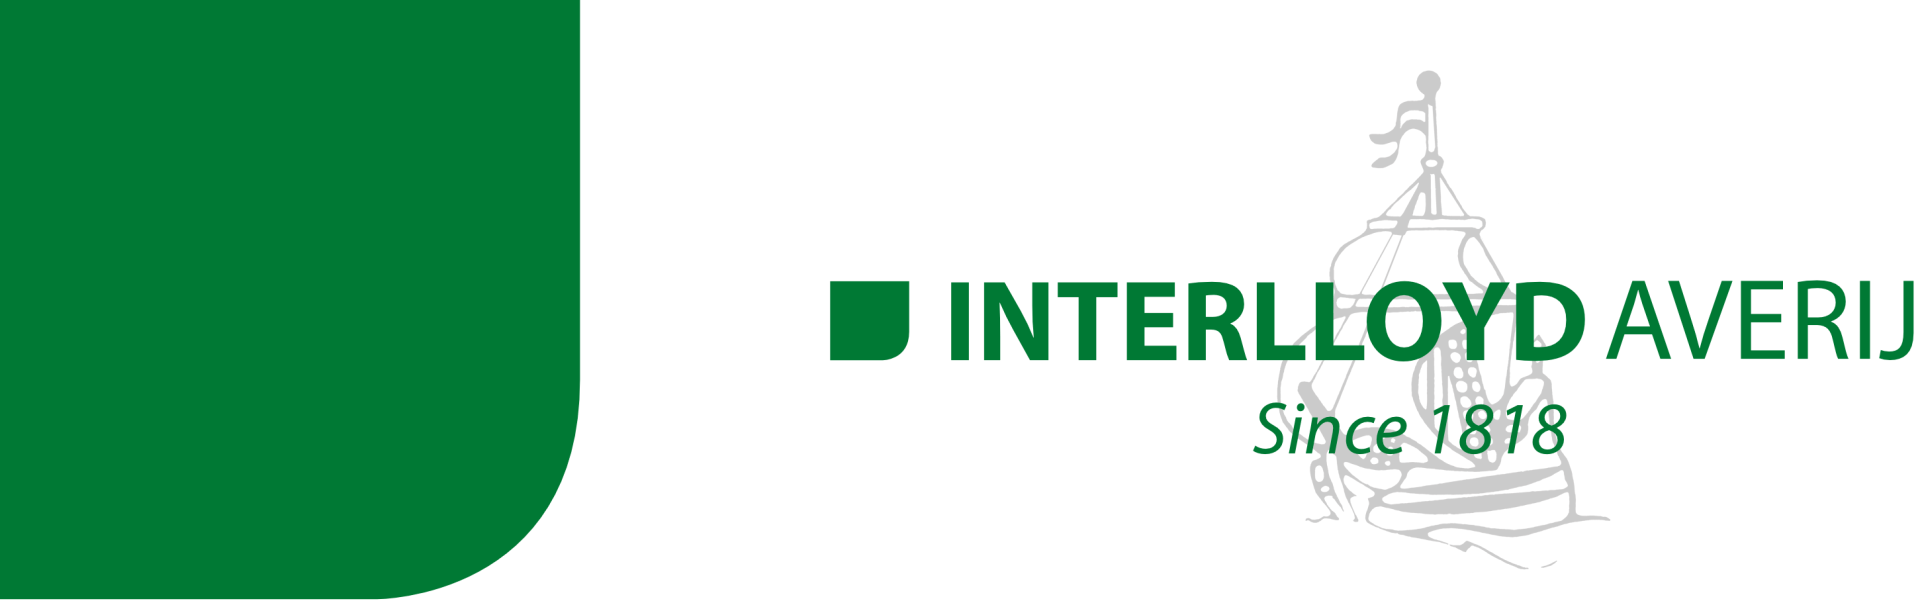 logo interlloyd averij recovery and claims surveyor